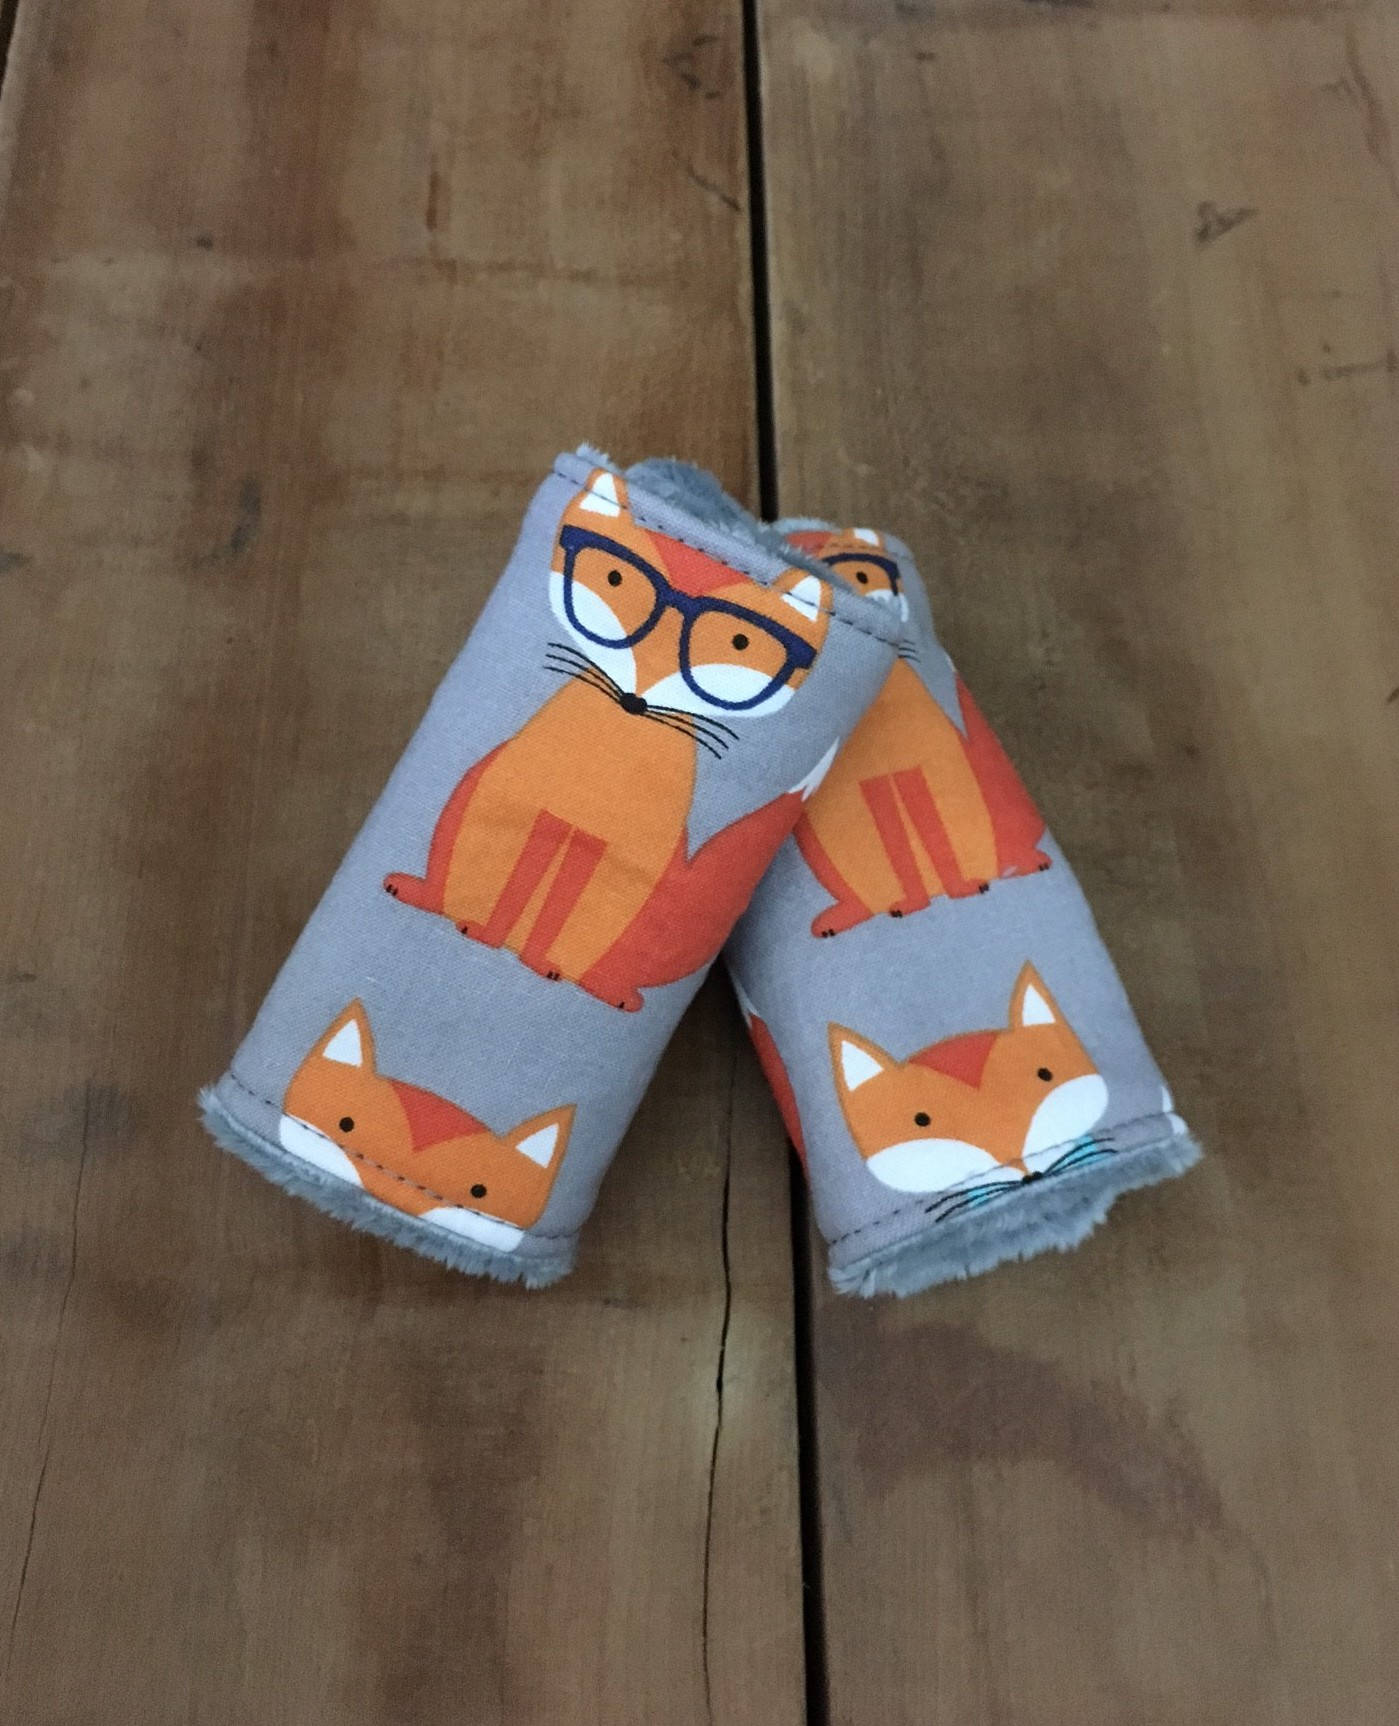 orange nerdy fox car seat strap covers shown in size 4"